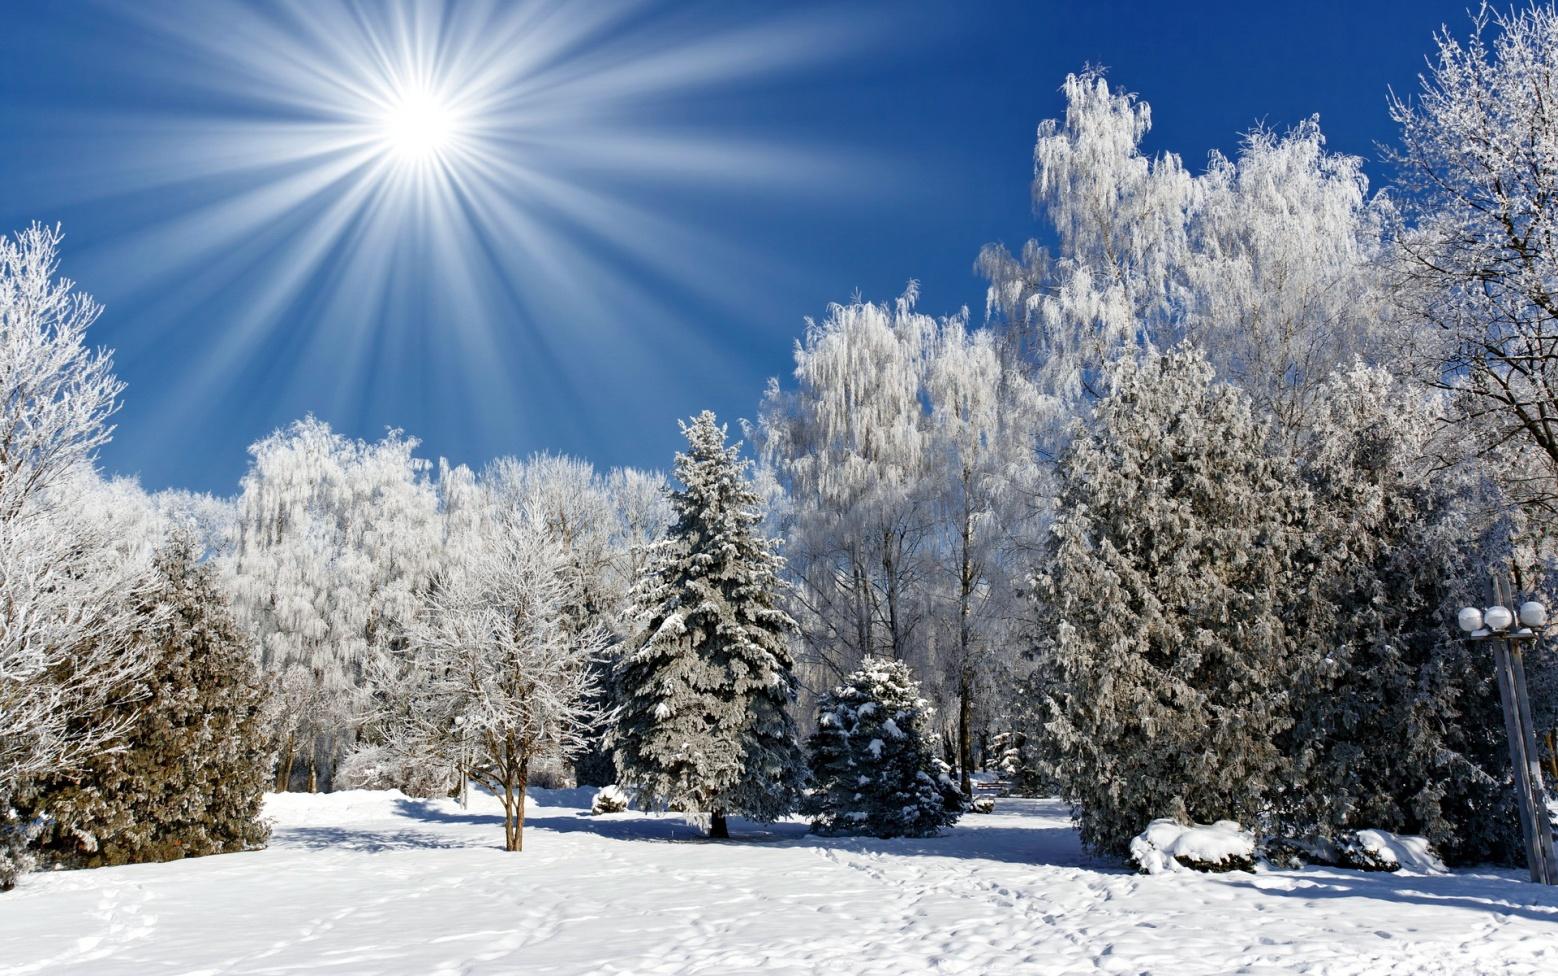 https://wallpaperscraft.com/image/sun_light_beams_sky_wood_winter_landscape_trees_hoarfrost_lamp_clearly_61270_3840x2400.jpg